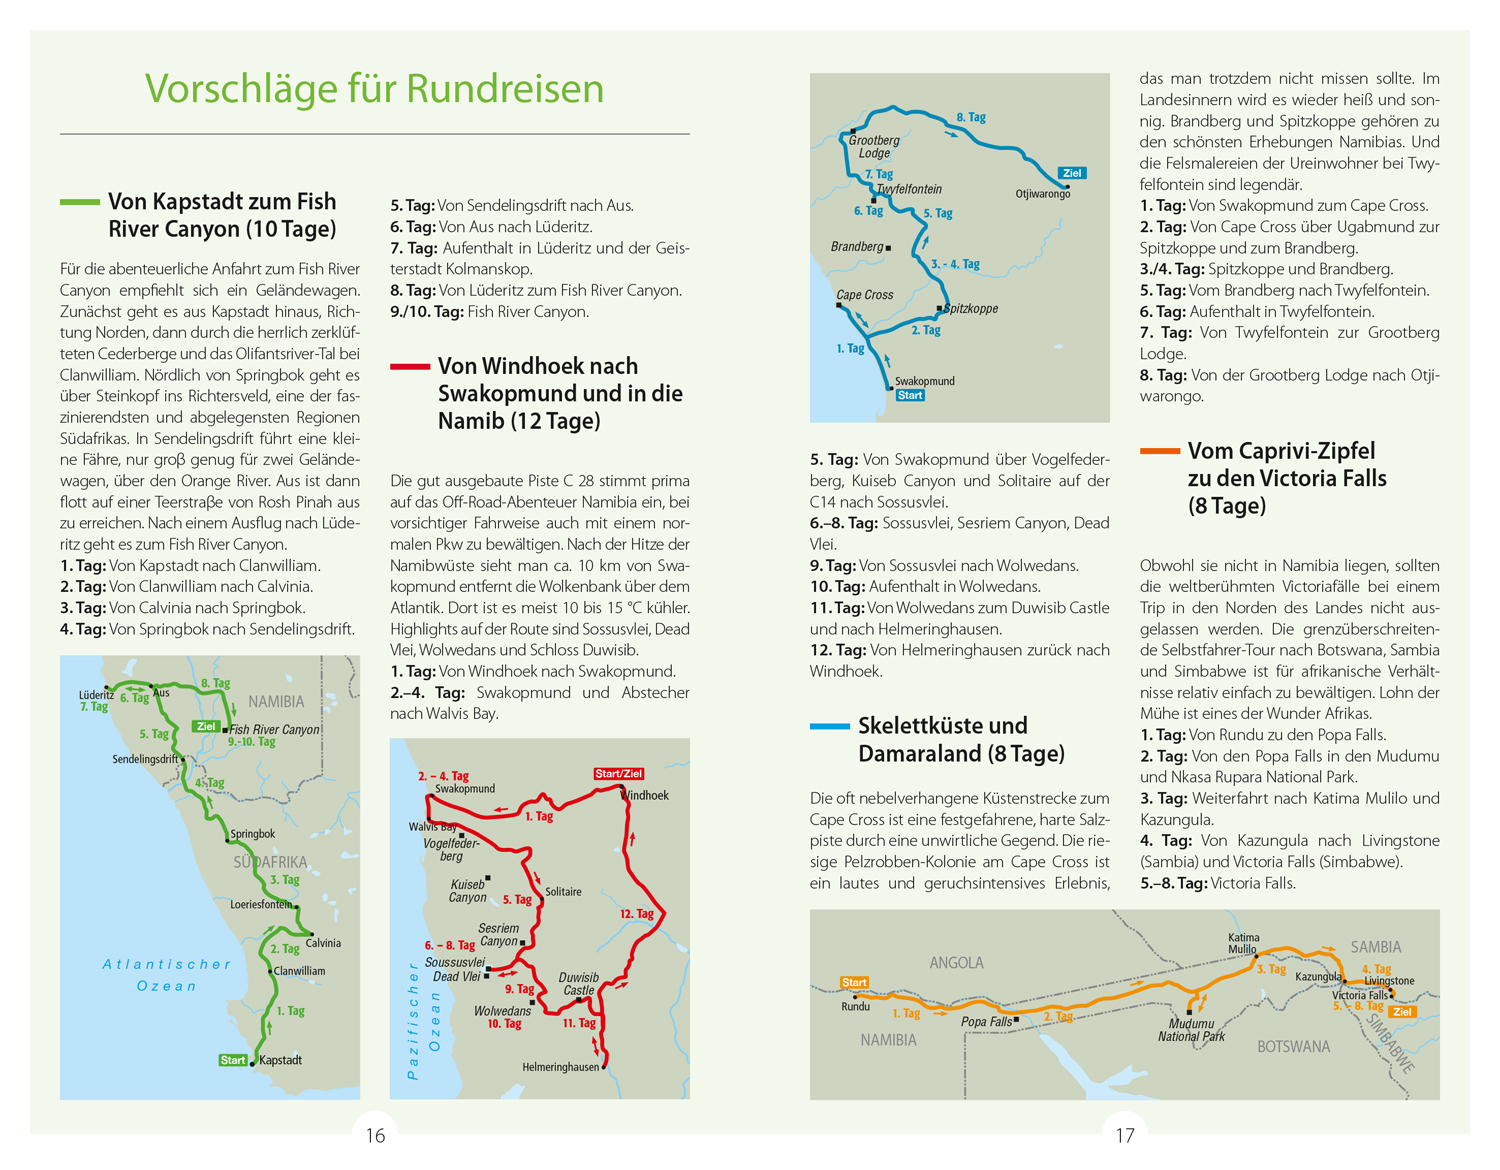 DuMont Reise-Handbuch Reiseführer Namibia